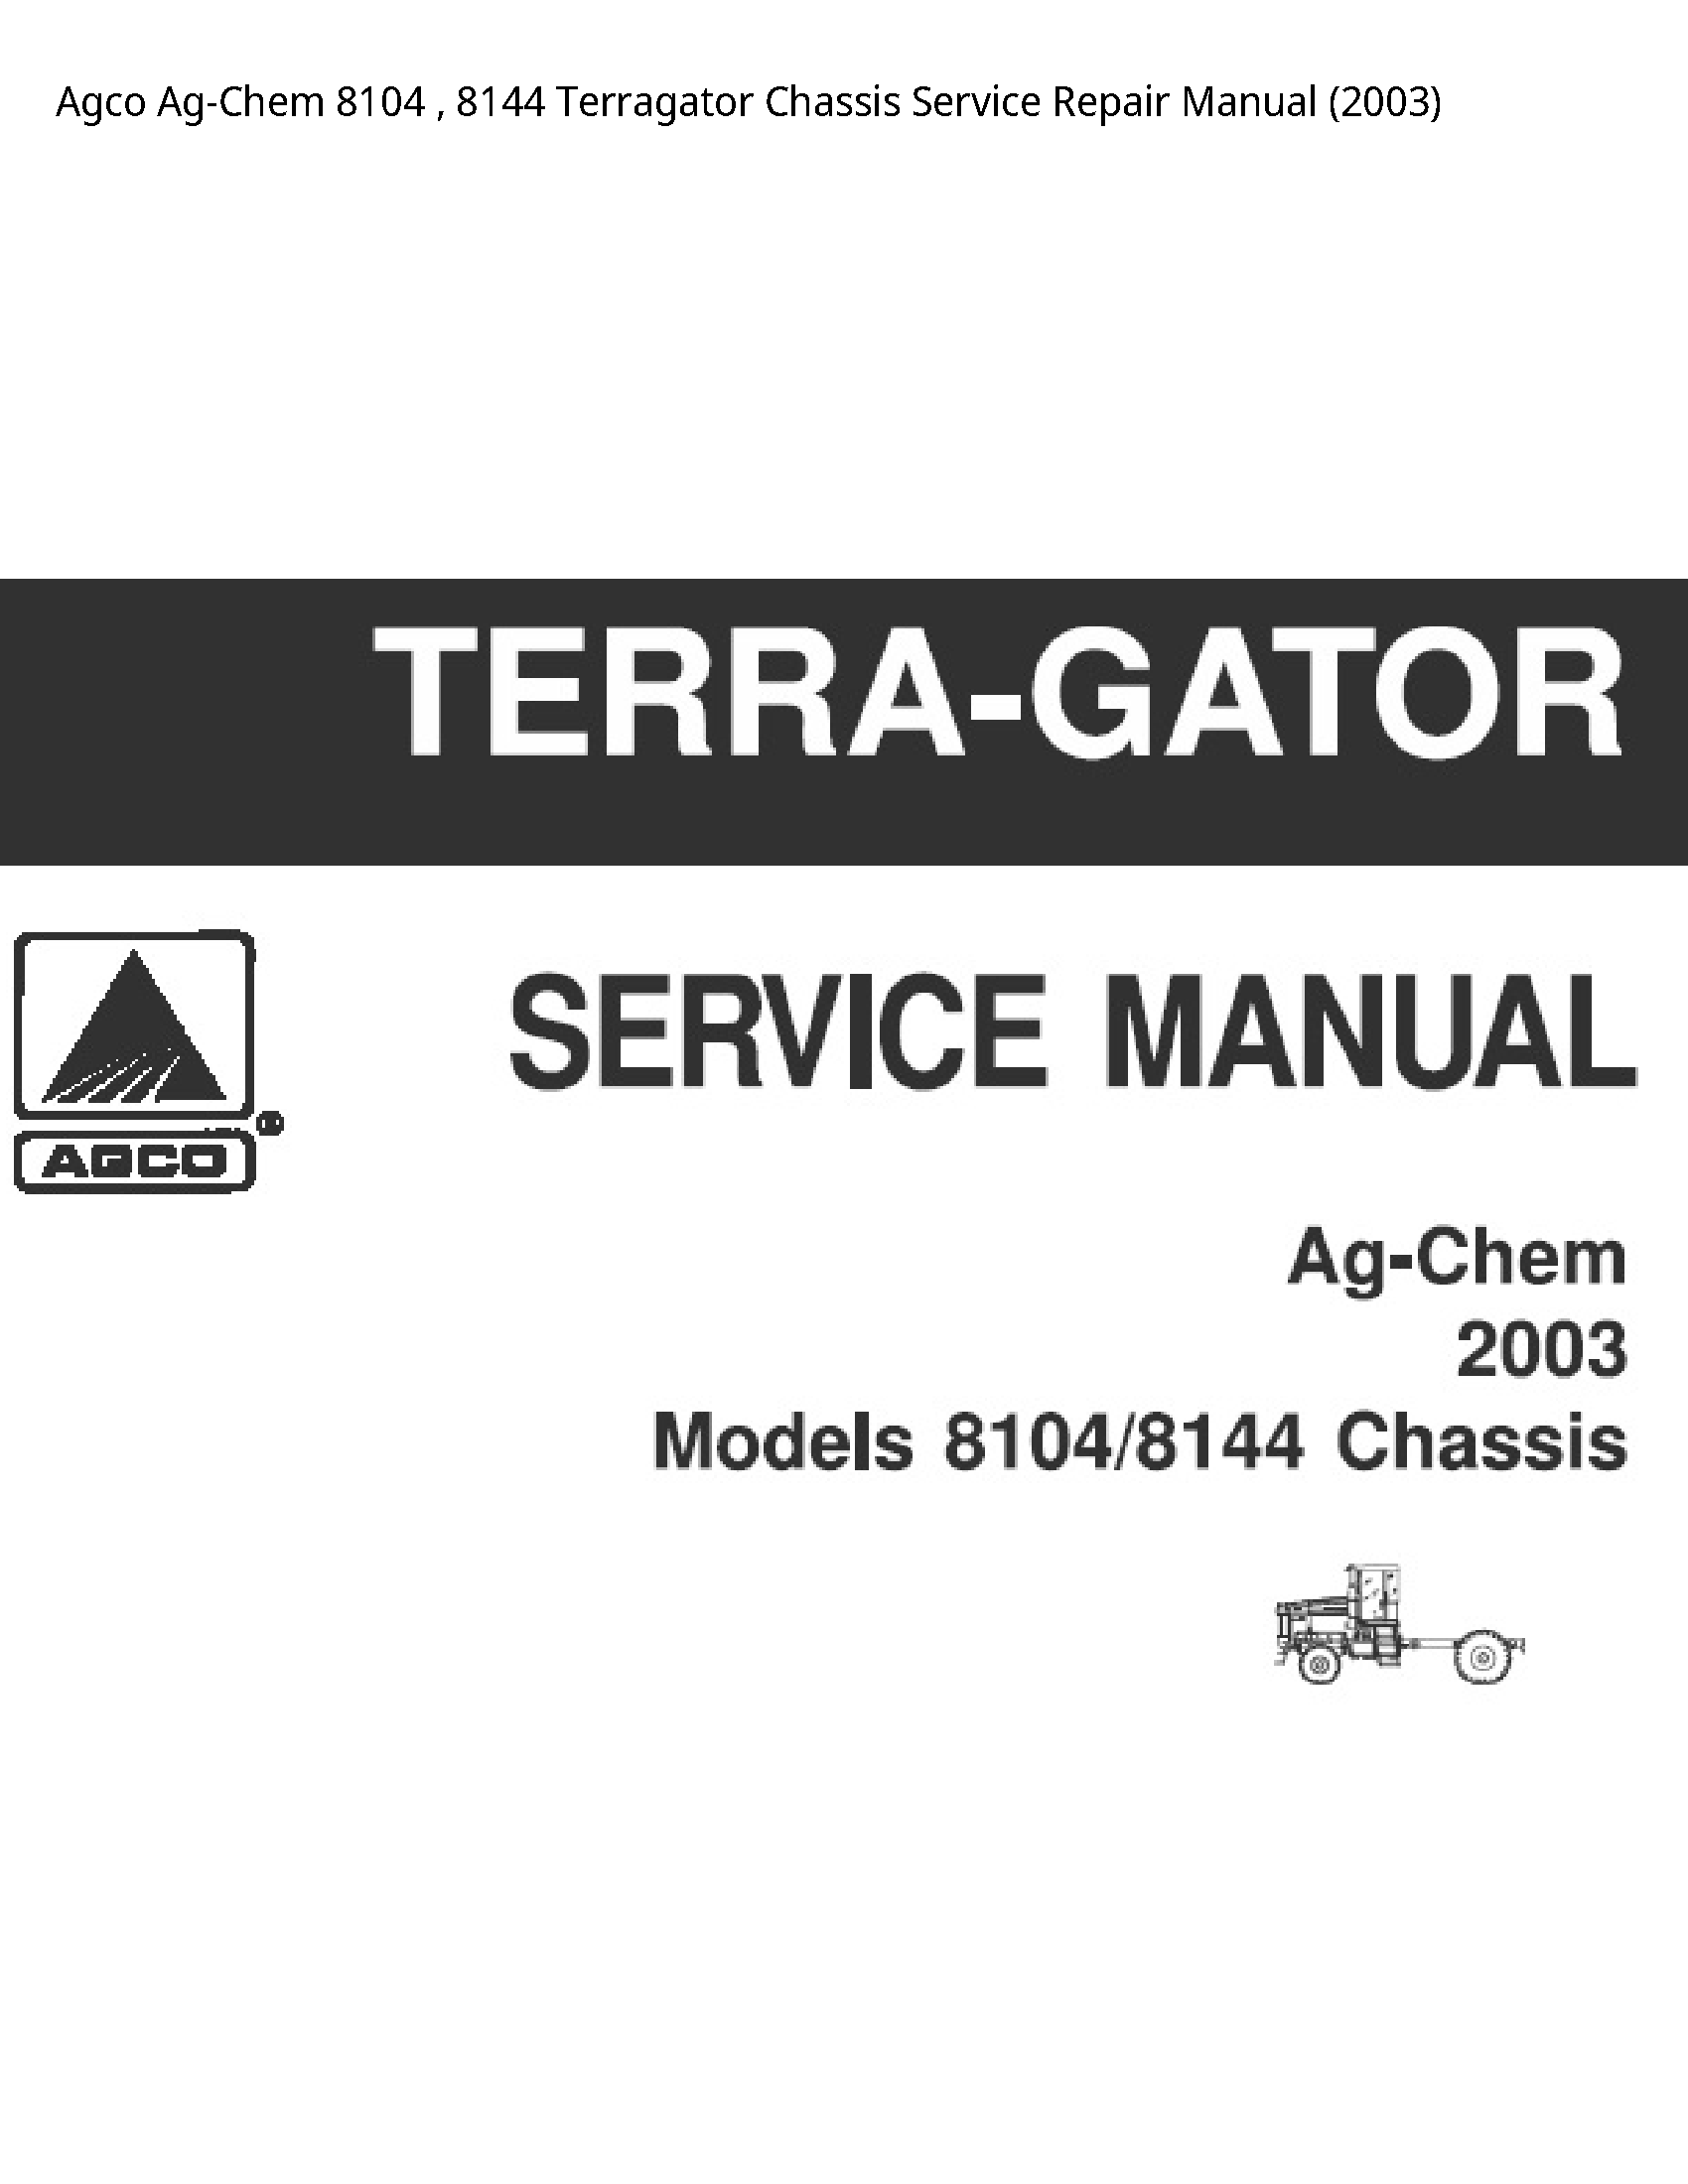 AGCO 8104 Ag-Chem Terragator Chassis manual